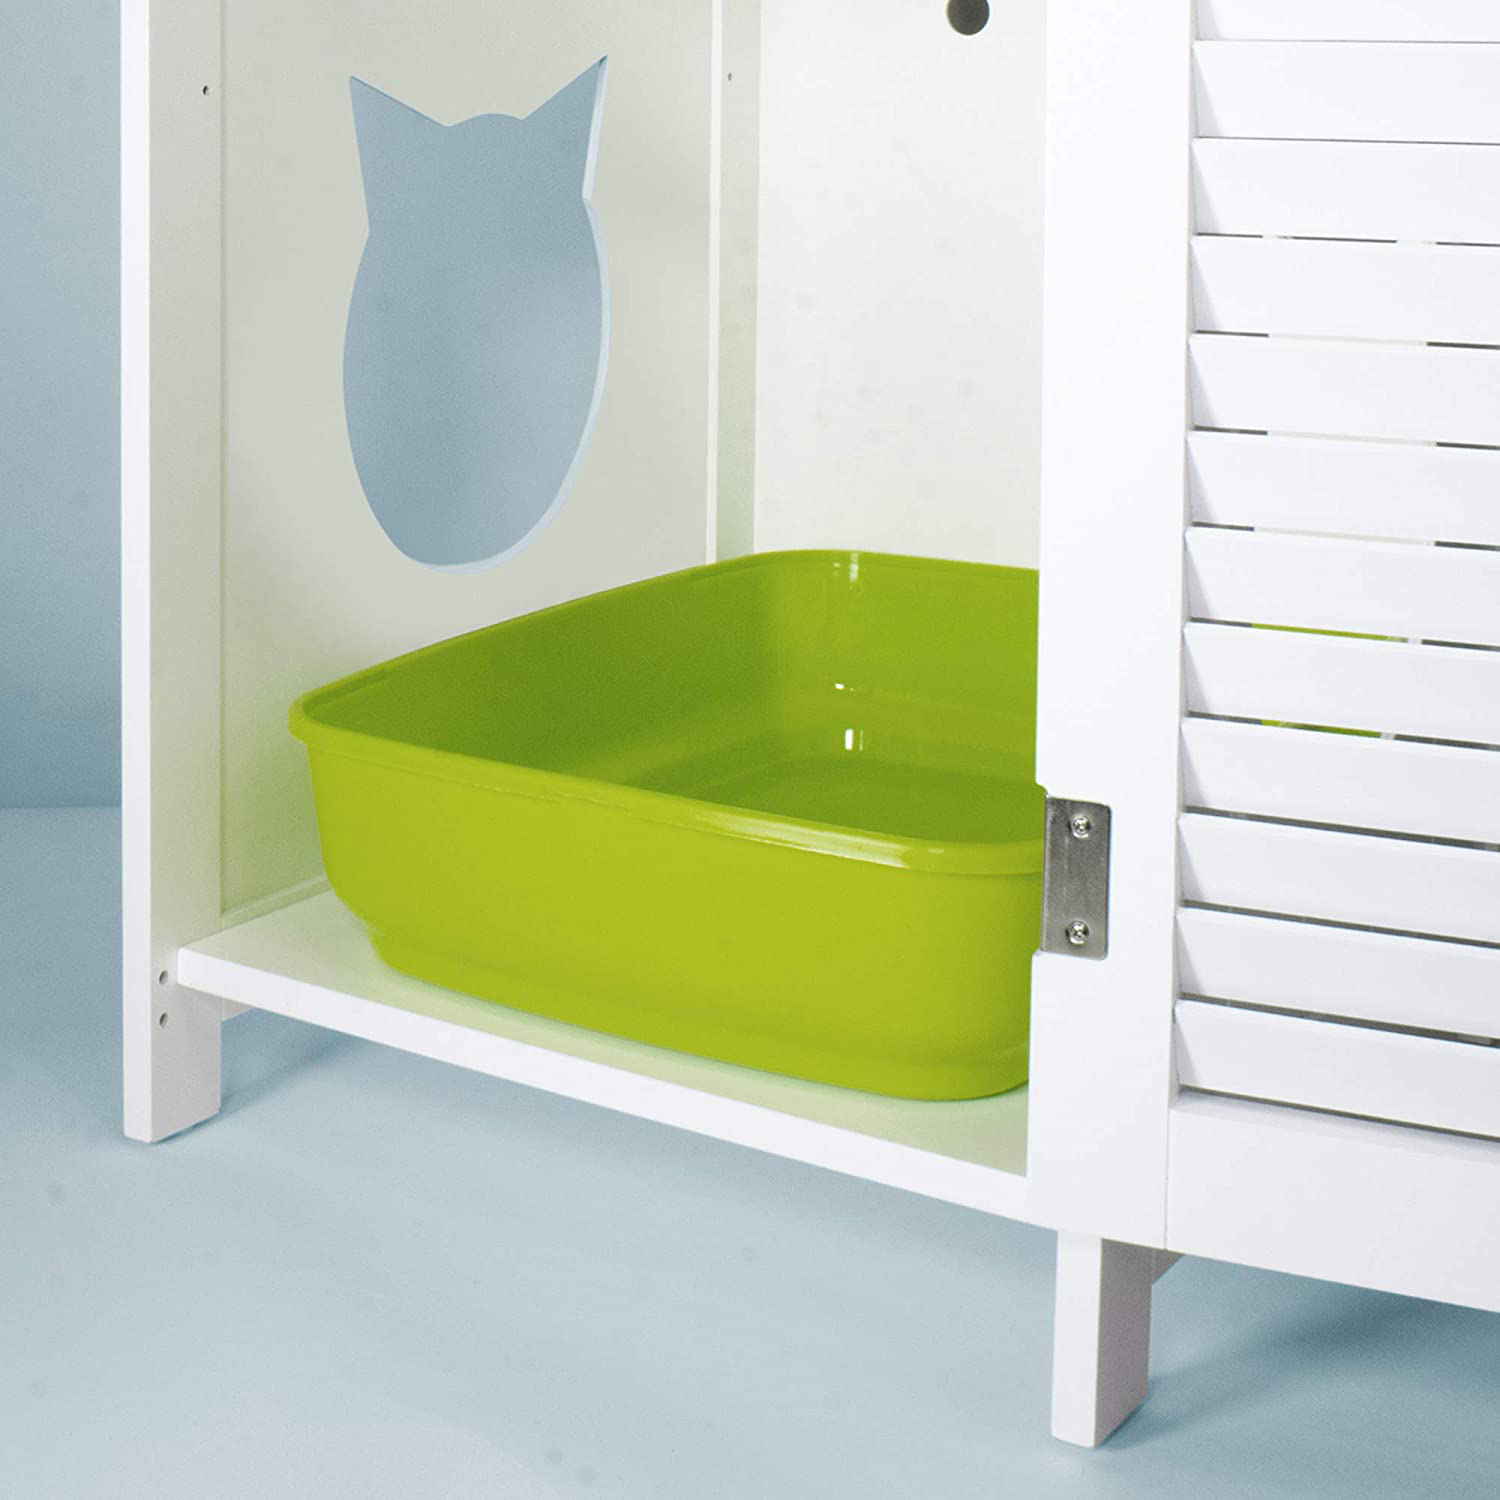 Penn-Plax Cat Walk Furniture: Contemporary Home Cat Litter Enclosure - Storage Drawer, Inner Shelf, and Shutter Style Door